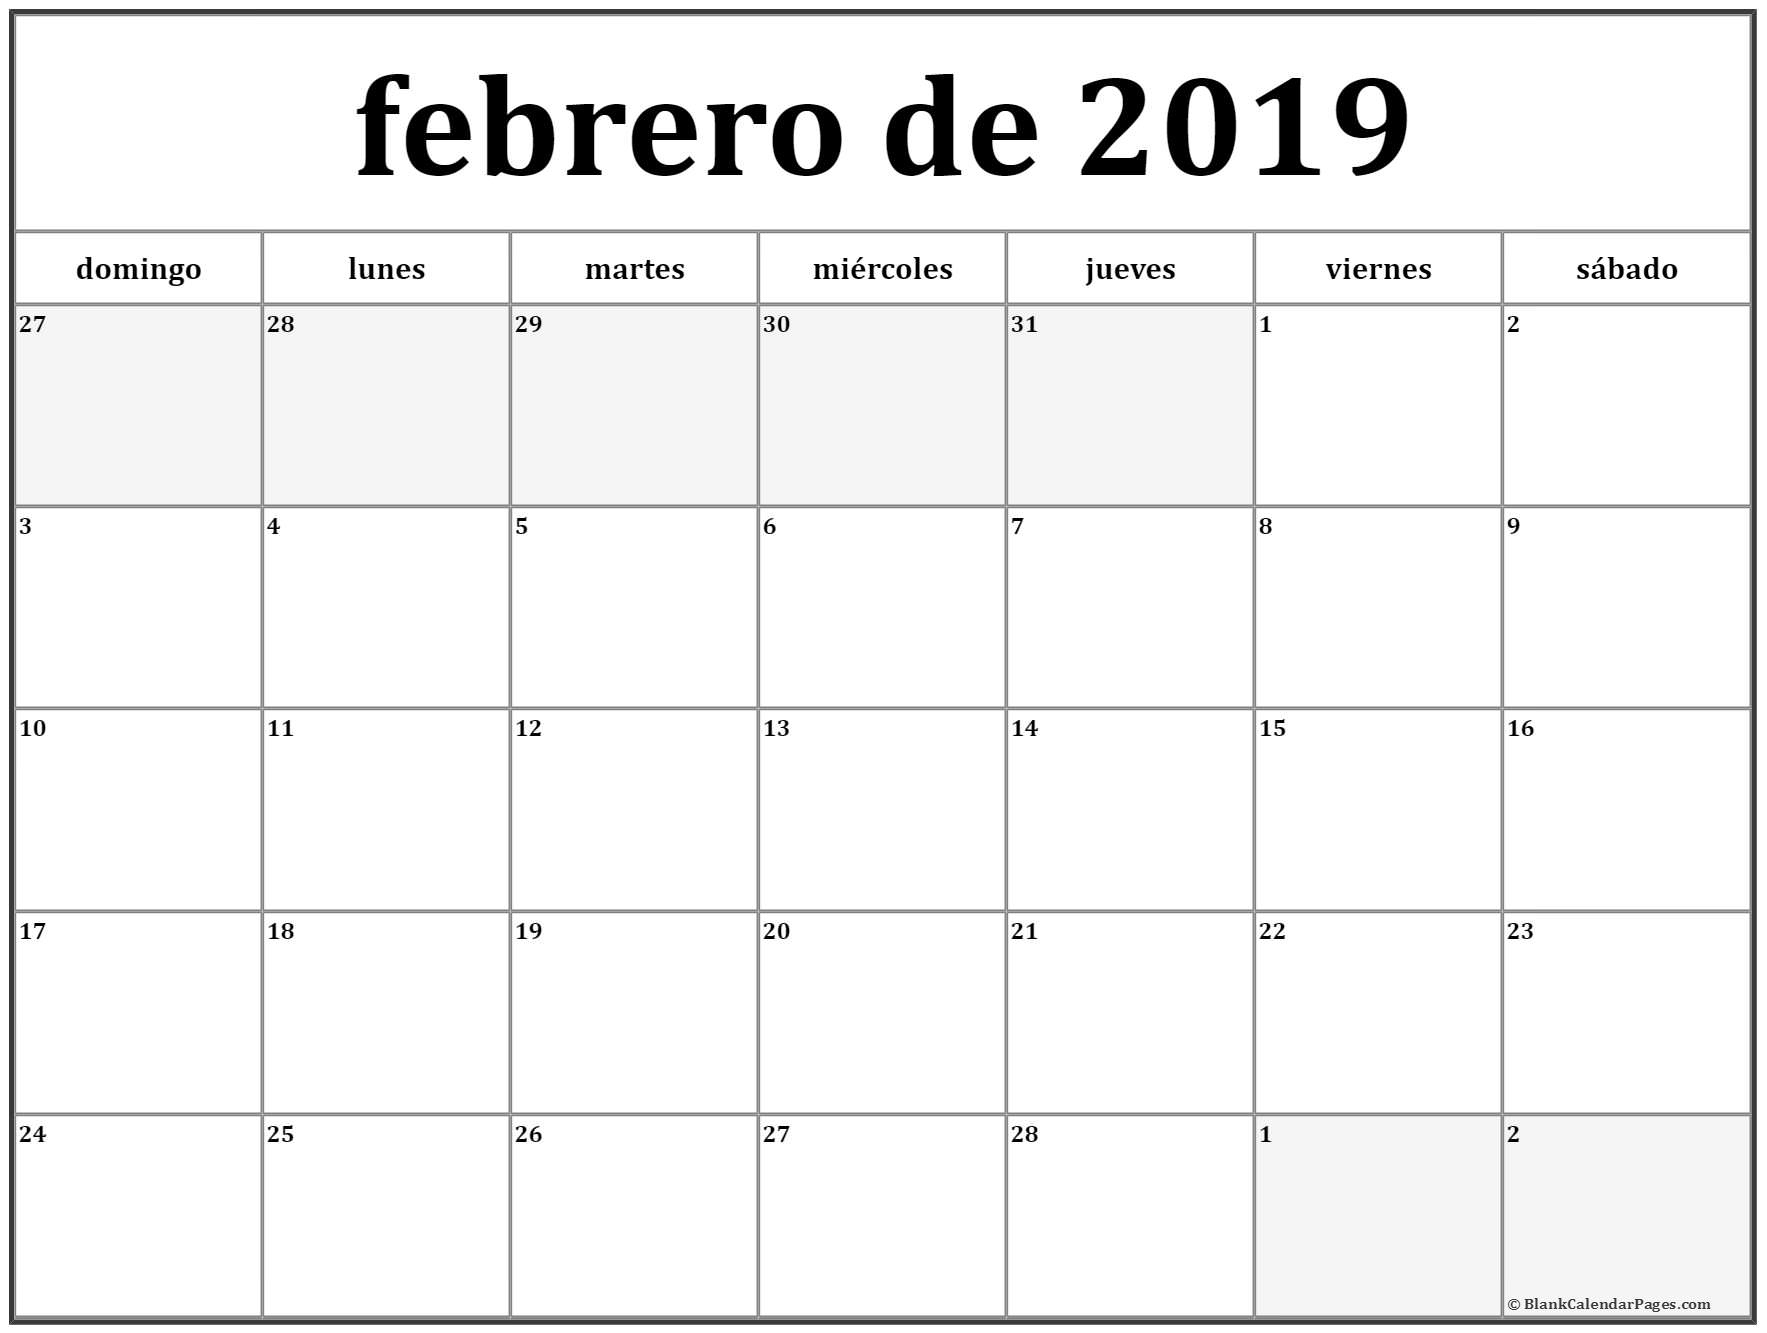 Febrero de 2019